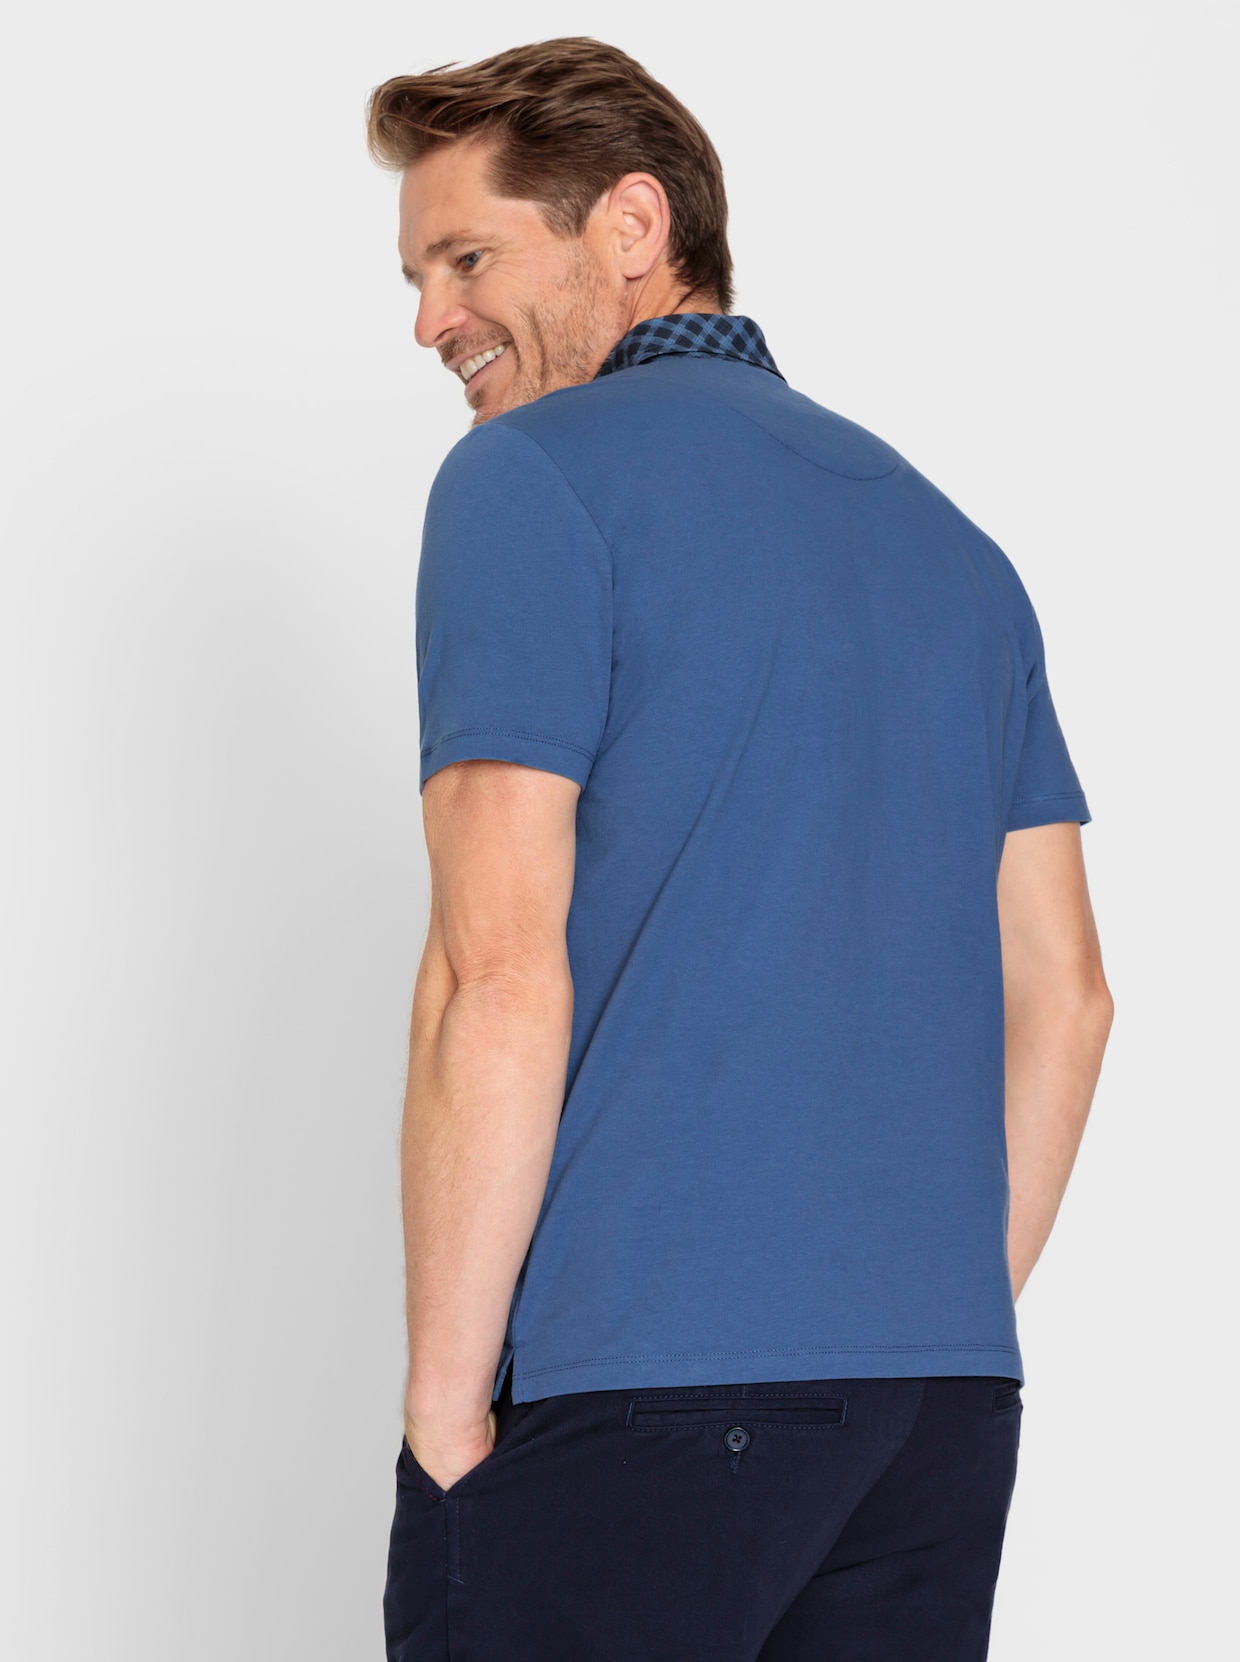 Marco Donati Kurzarm-Shirt - jeansblau